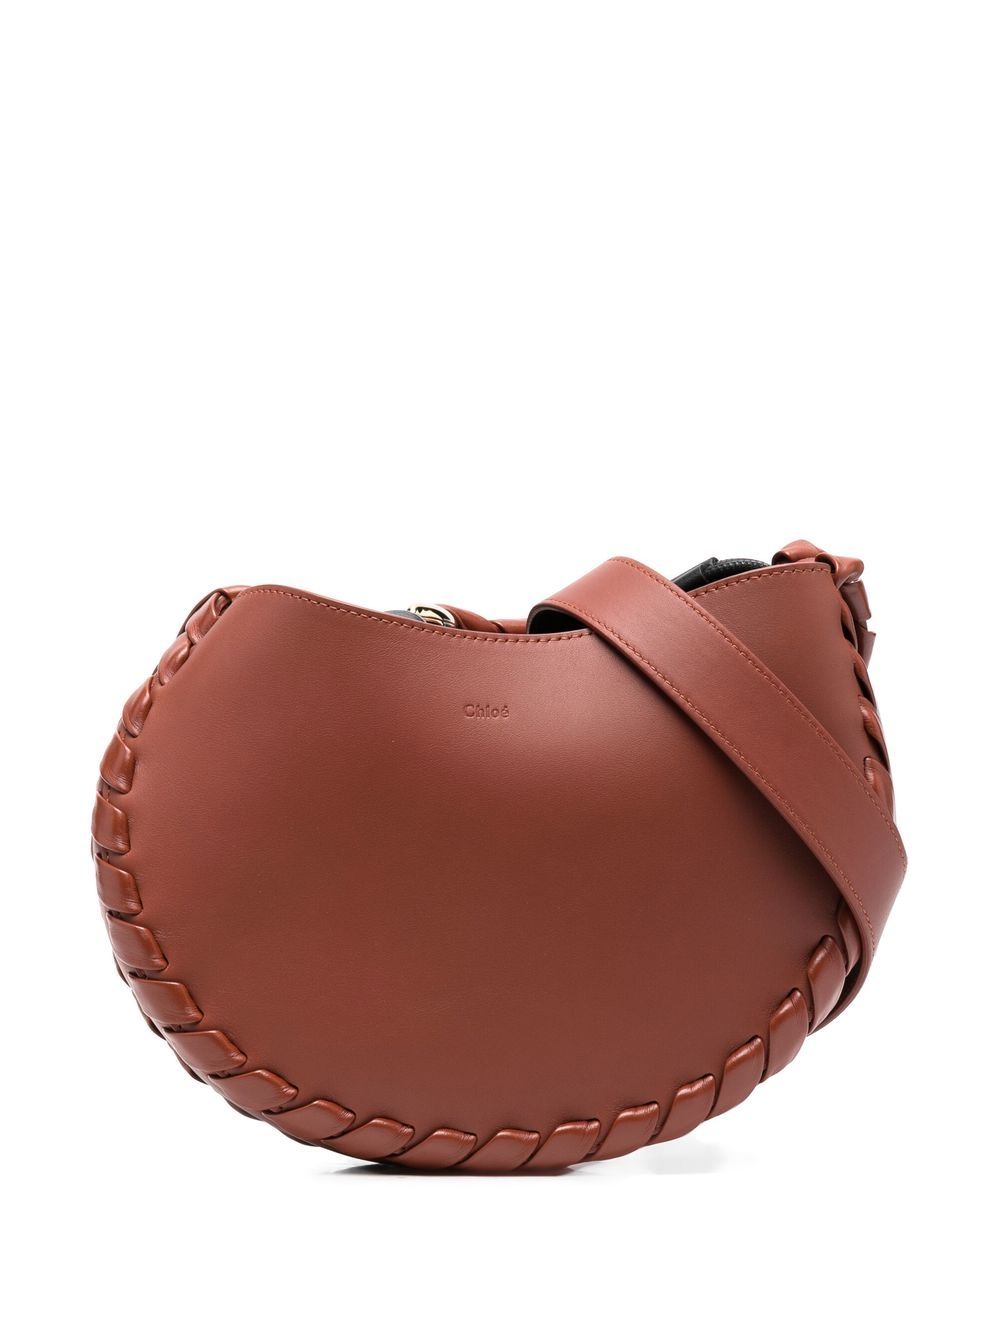 Image 1 of Chloé Mate S Hobo leather crossbody bag